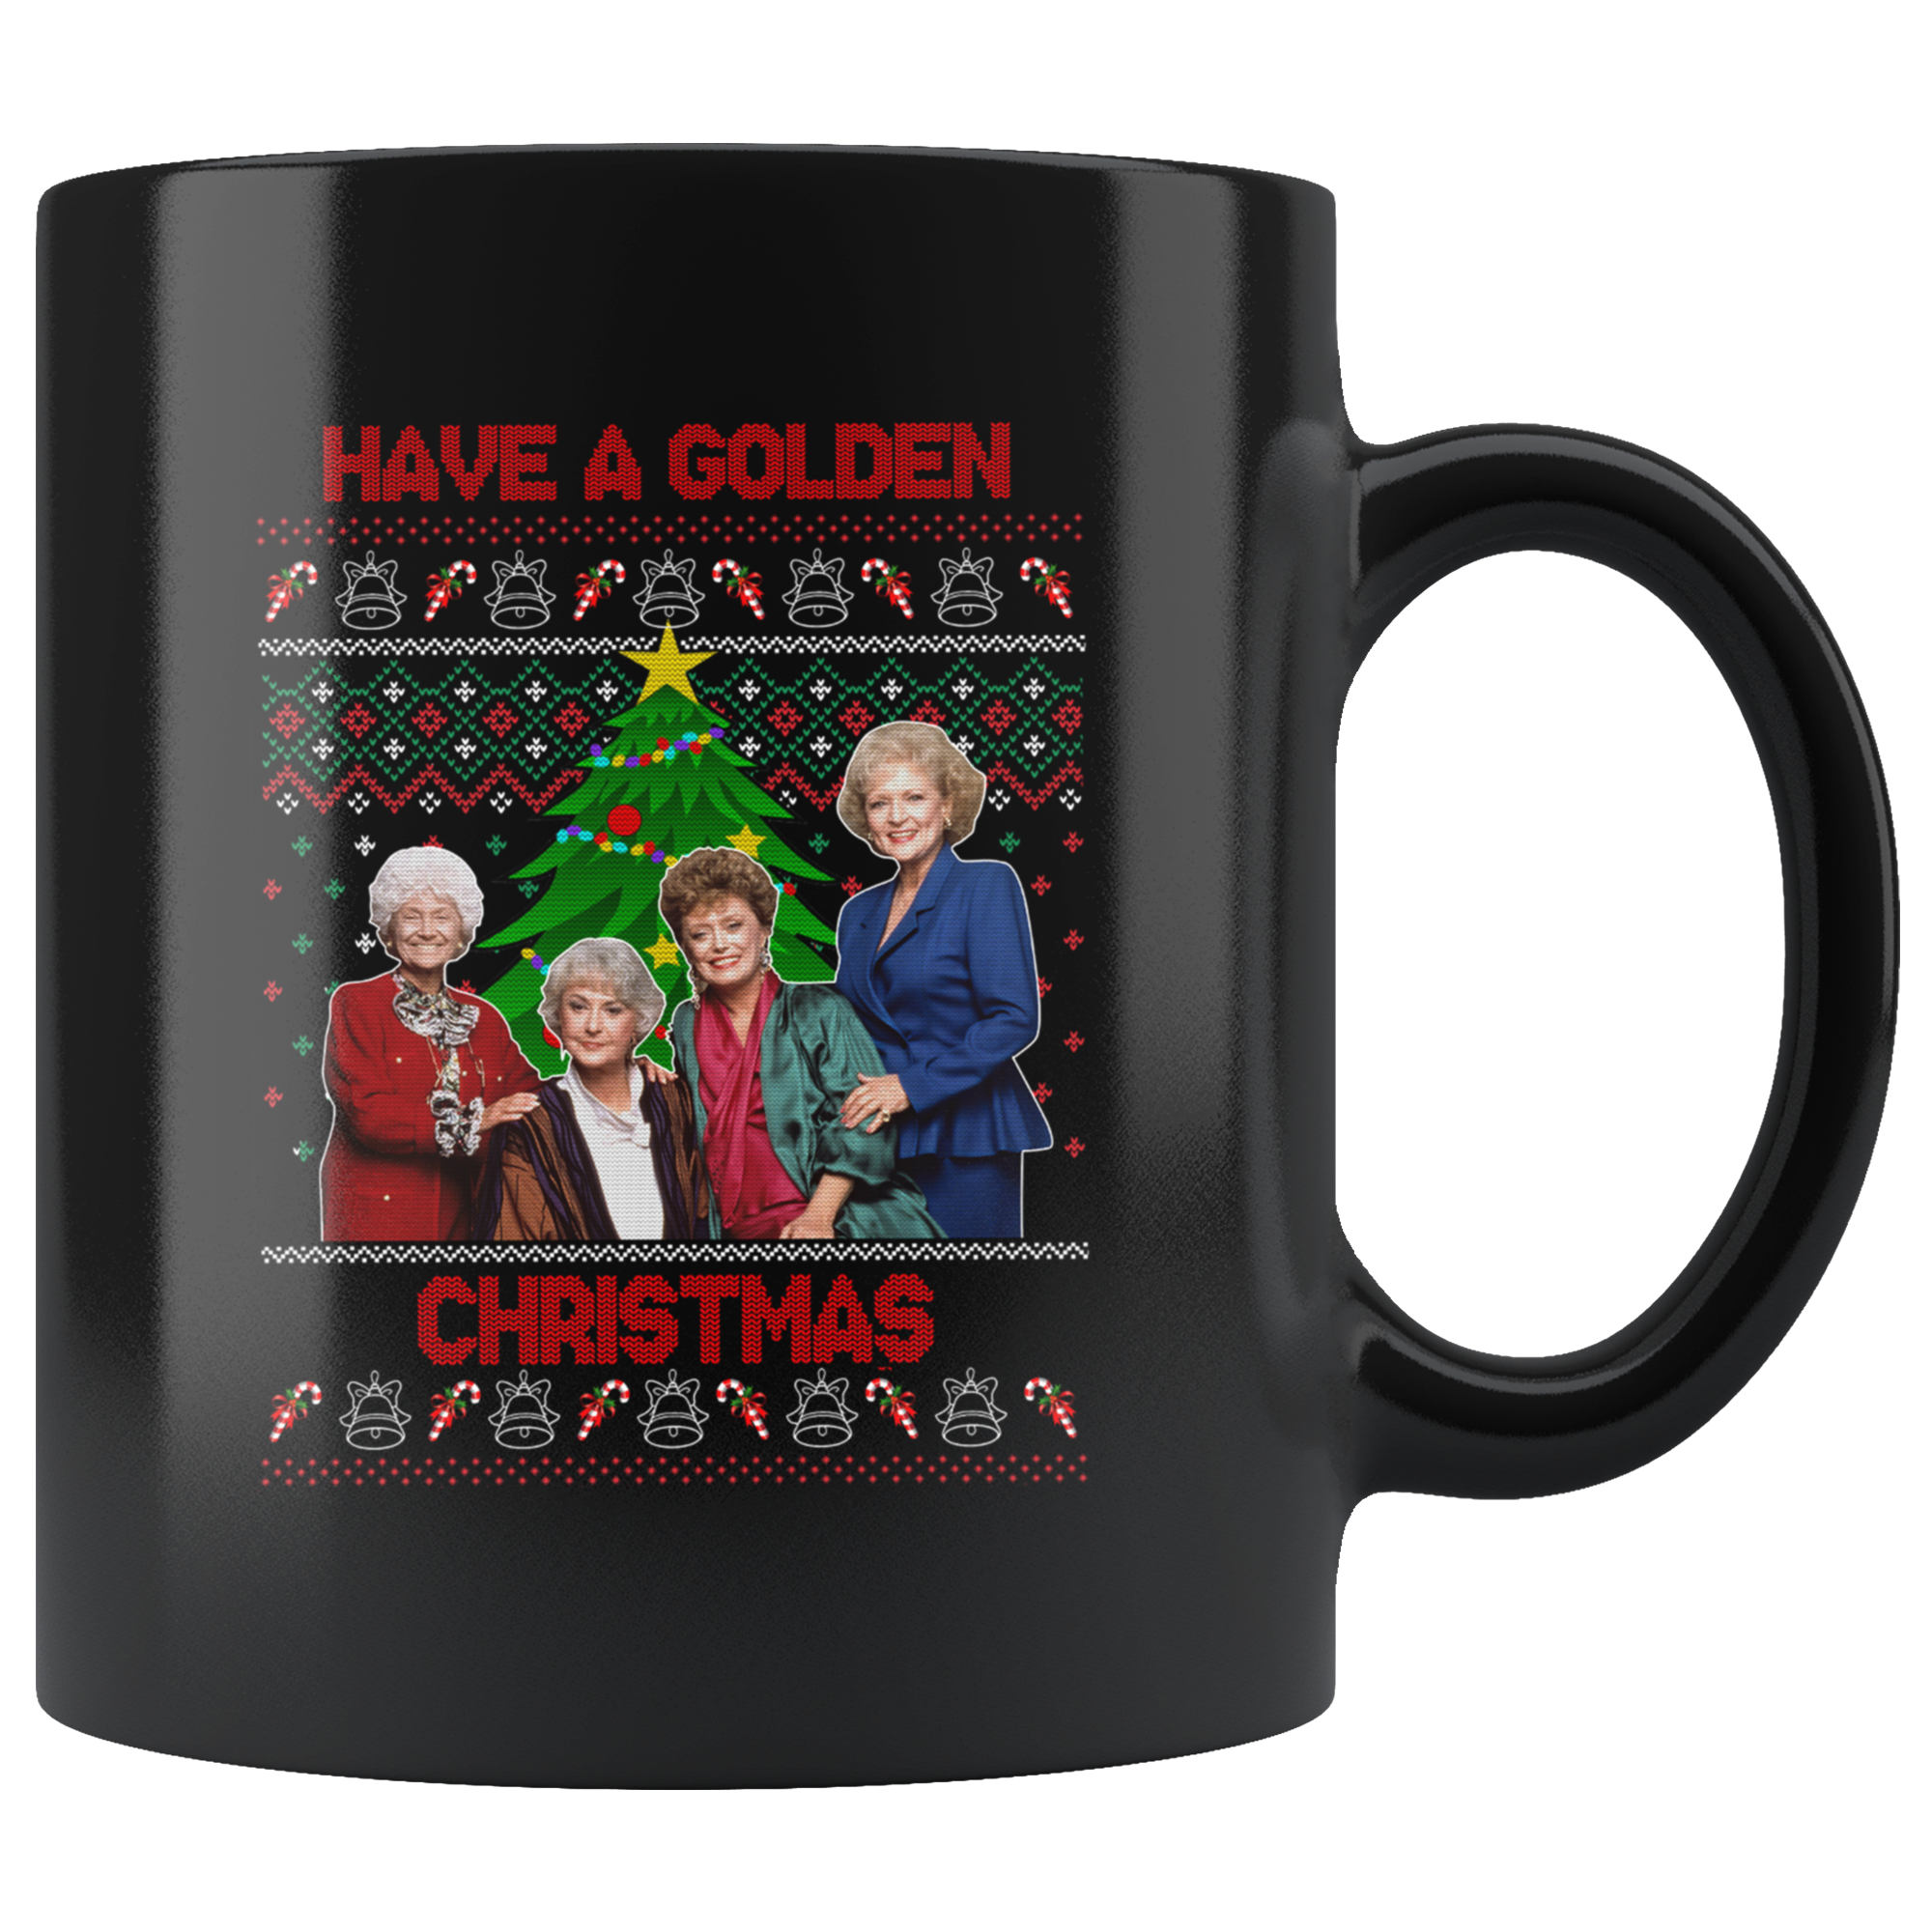 Golden Girls Have A Golden Christmas Mug